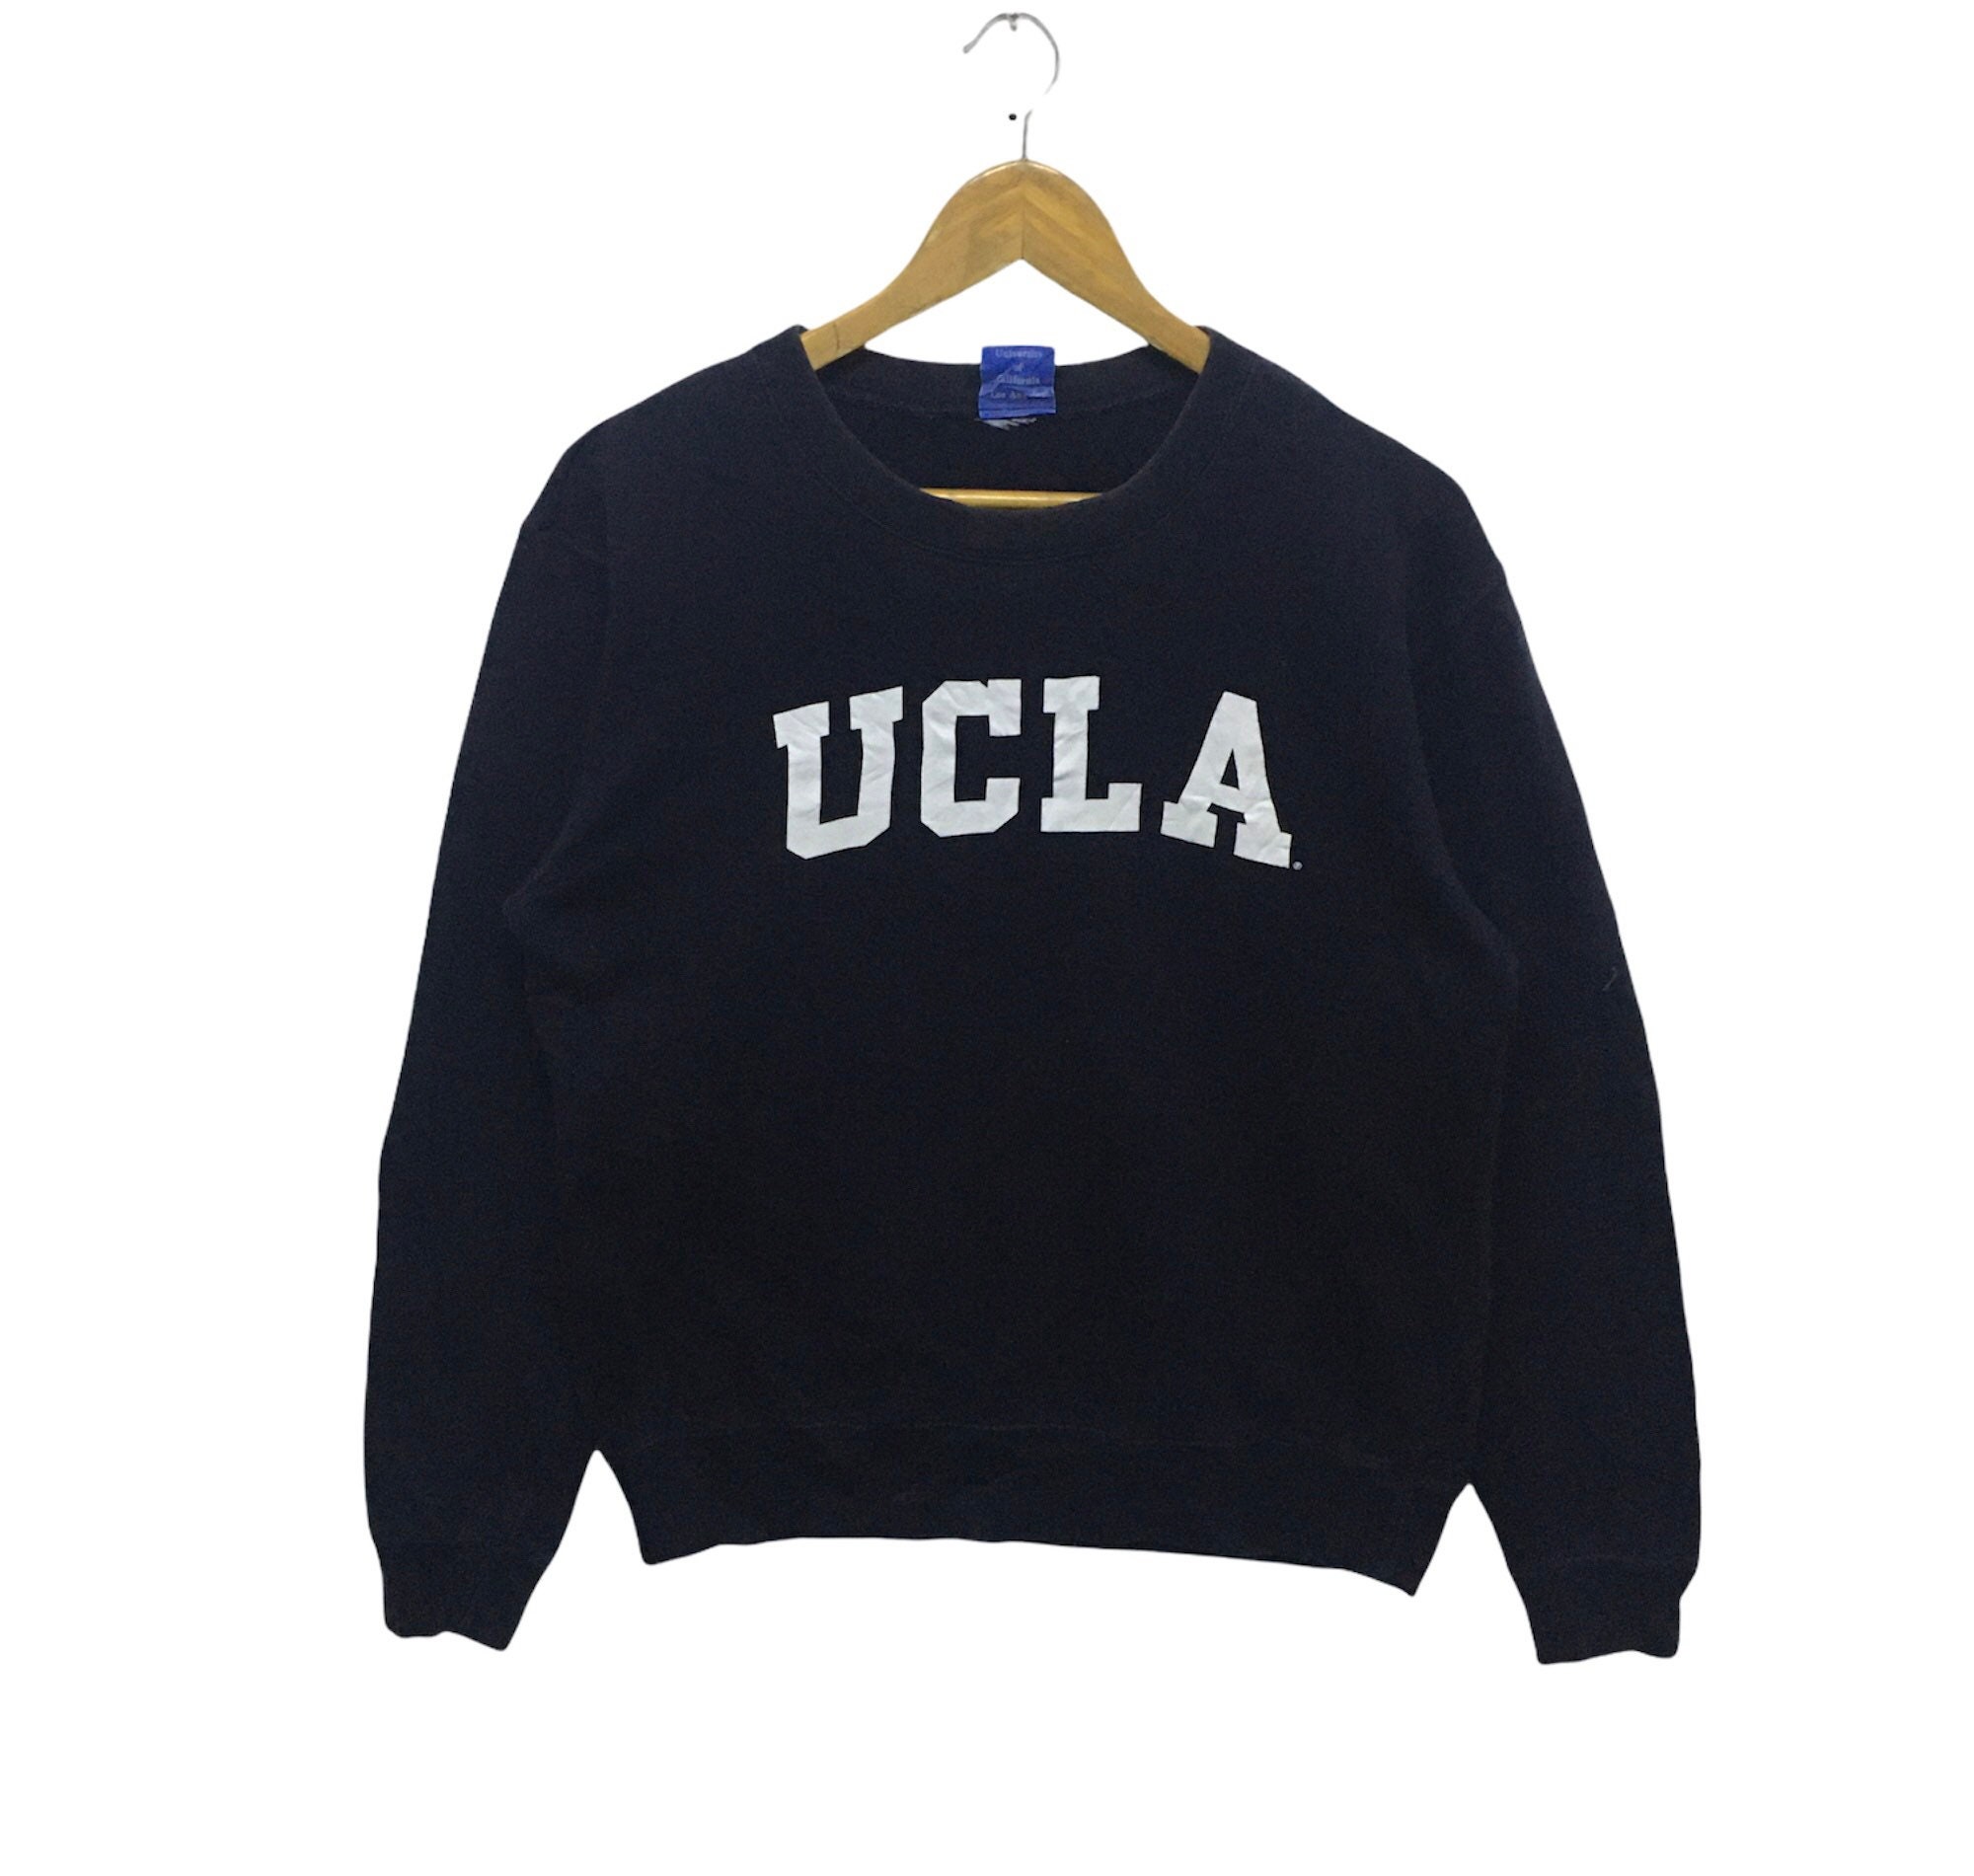 Rare!!Champion X UCLA sweatshirt ucla pullover ucla sweater shirt jacket hoodies windbreaker big logo